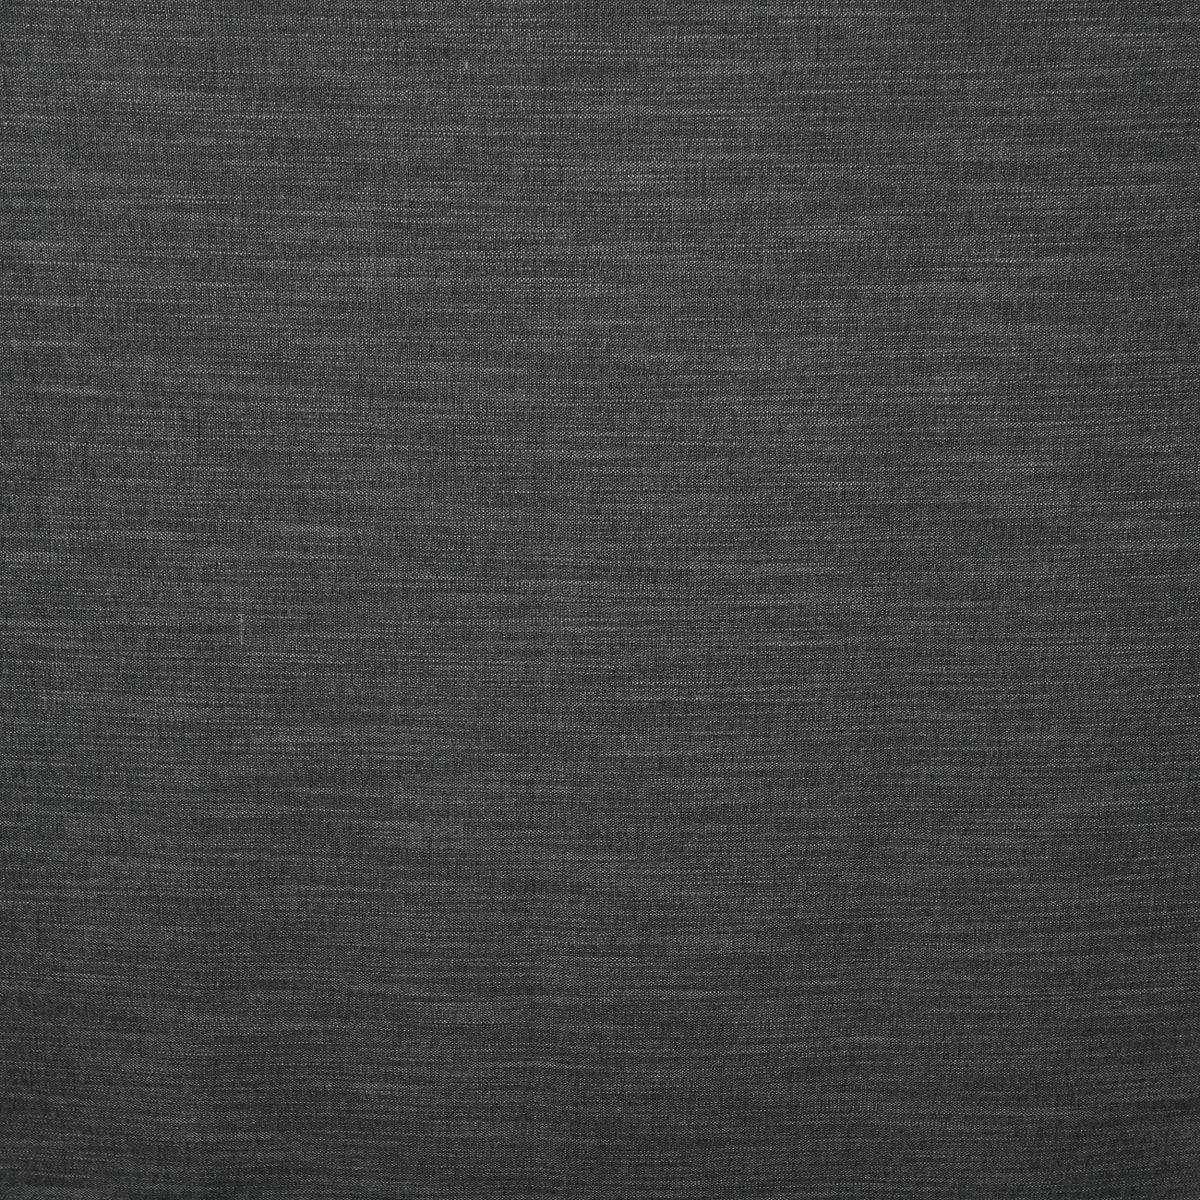 Night curtain blue gray Yeti